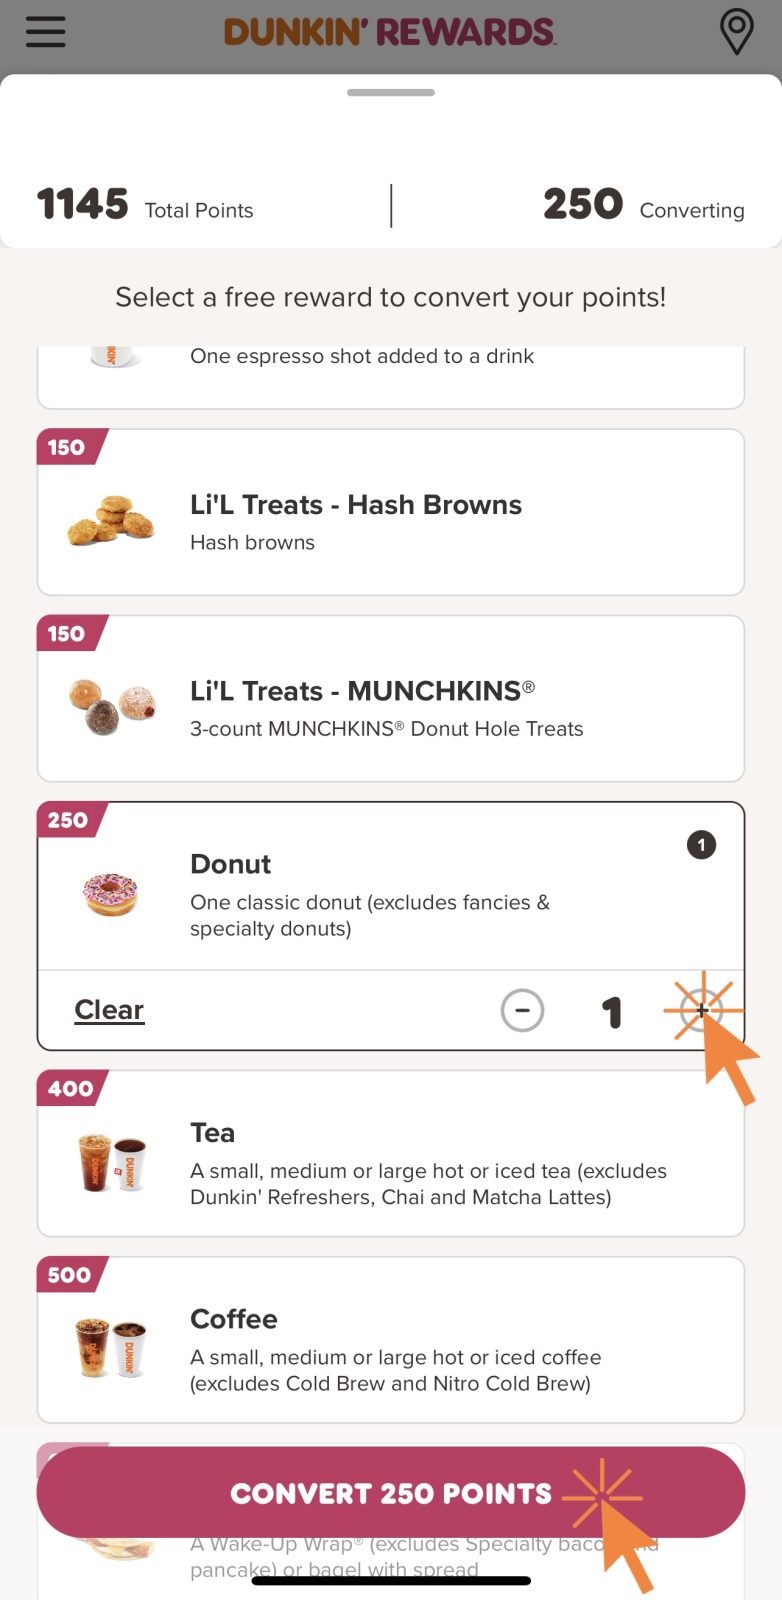 How To Convert Dunkin Rewards Points